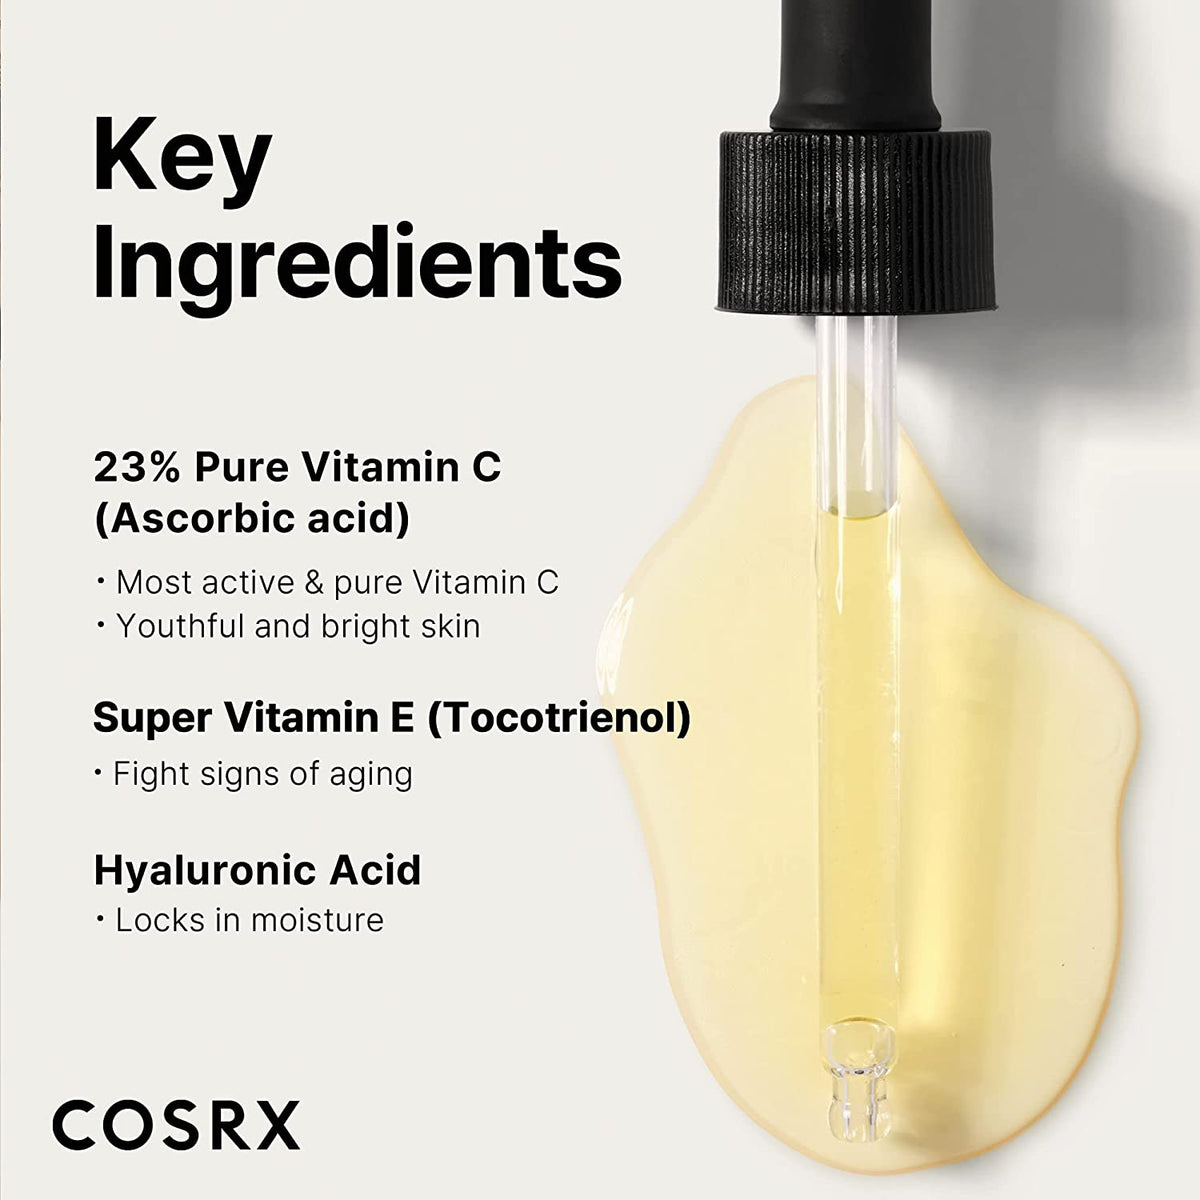 COSRX Vitamin C 23% Serum with Vitamin E & Hyaluronic Acid